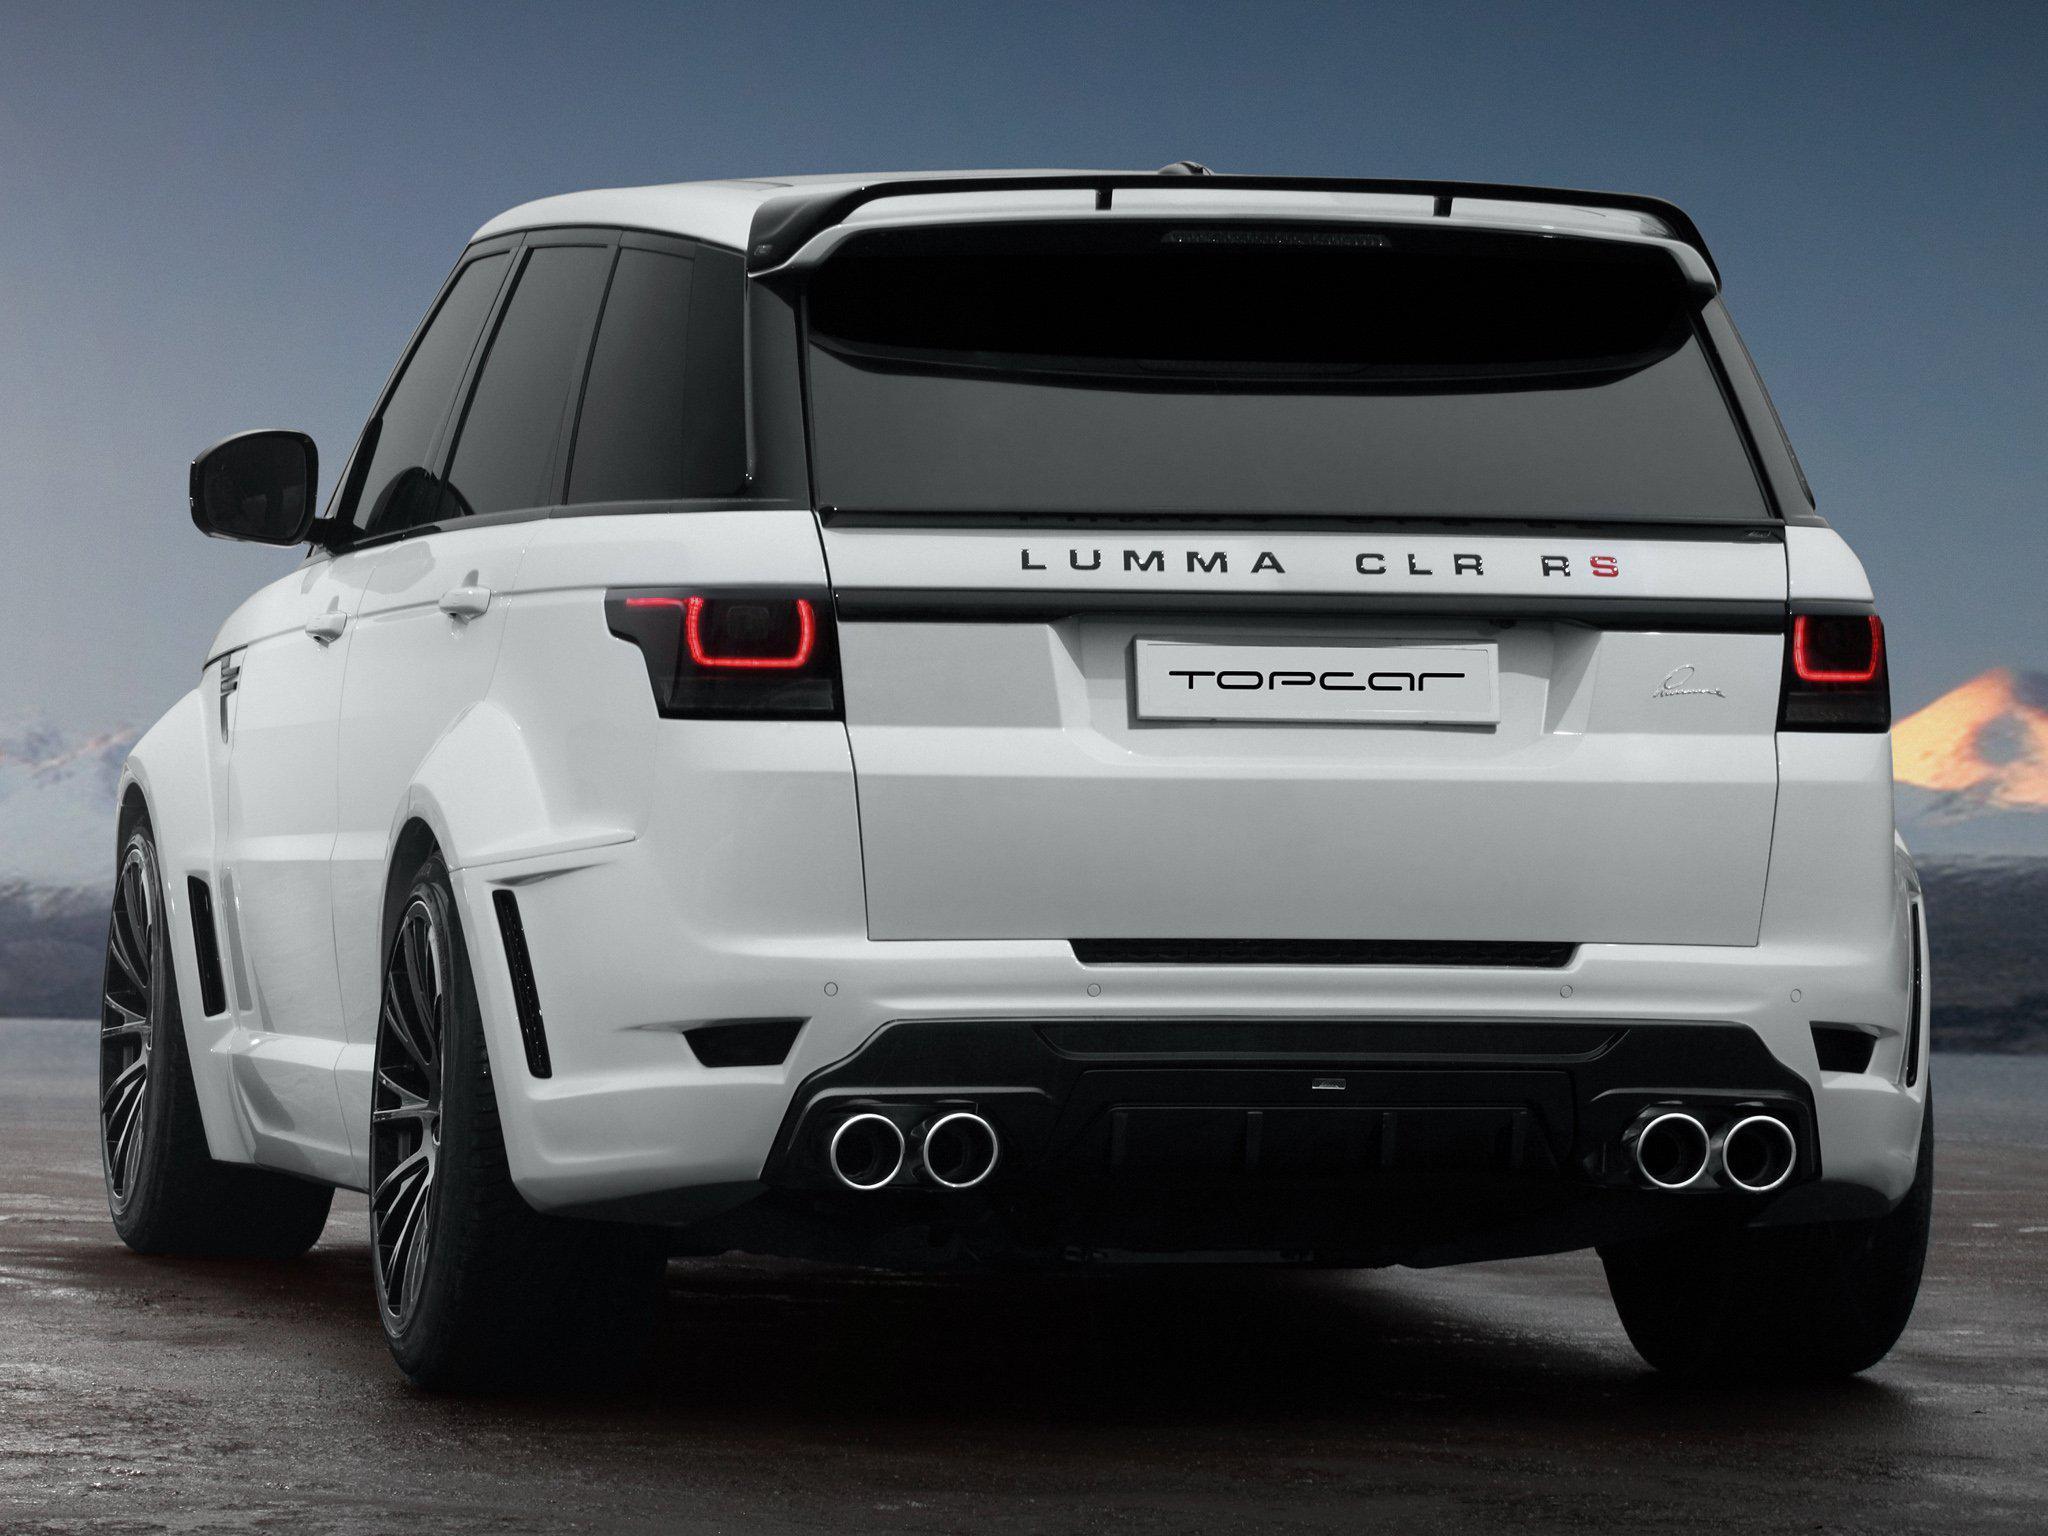 HD 2014 Lumma Range Rover Sport Clr Suv Tuning Ew Image Gallery